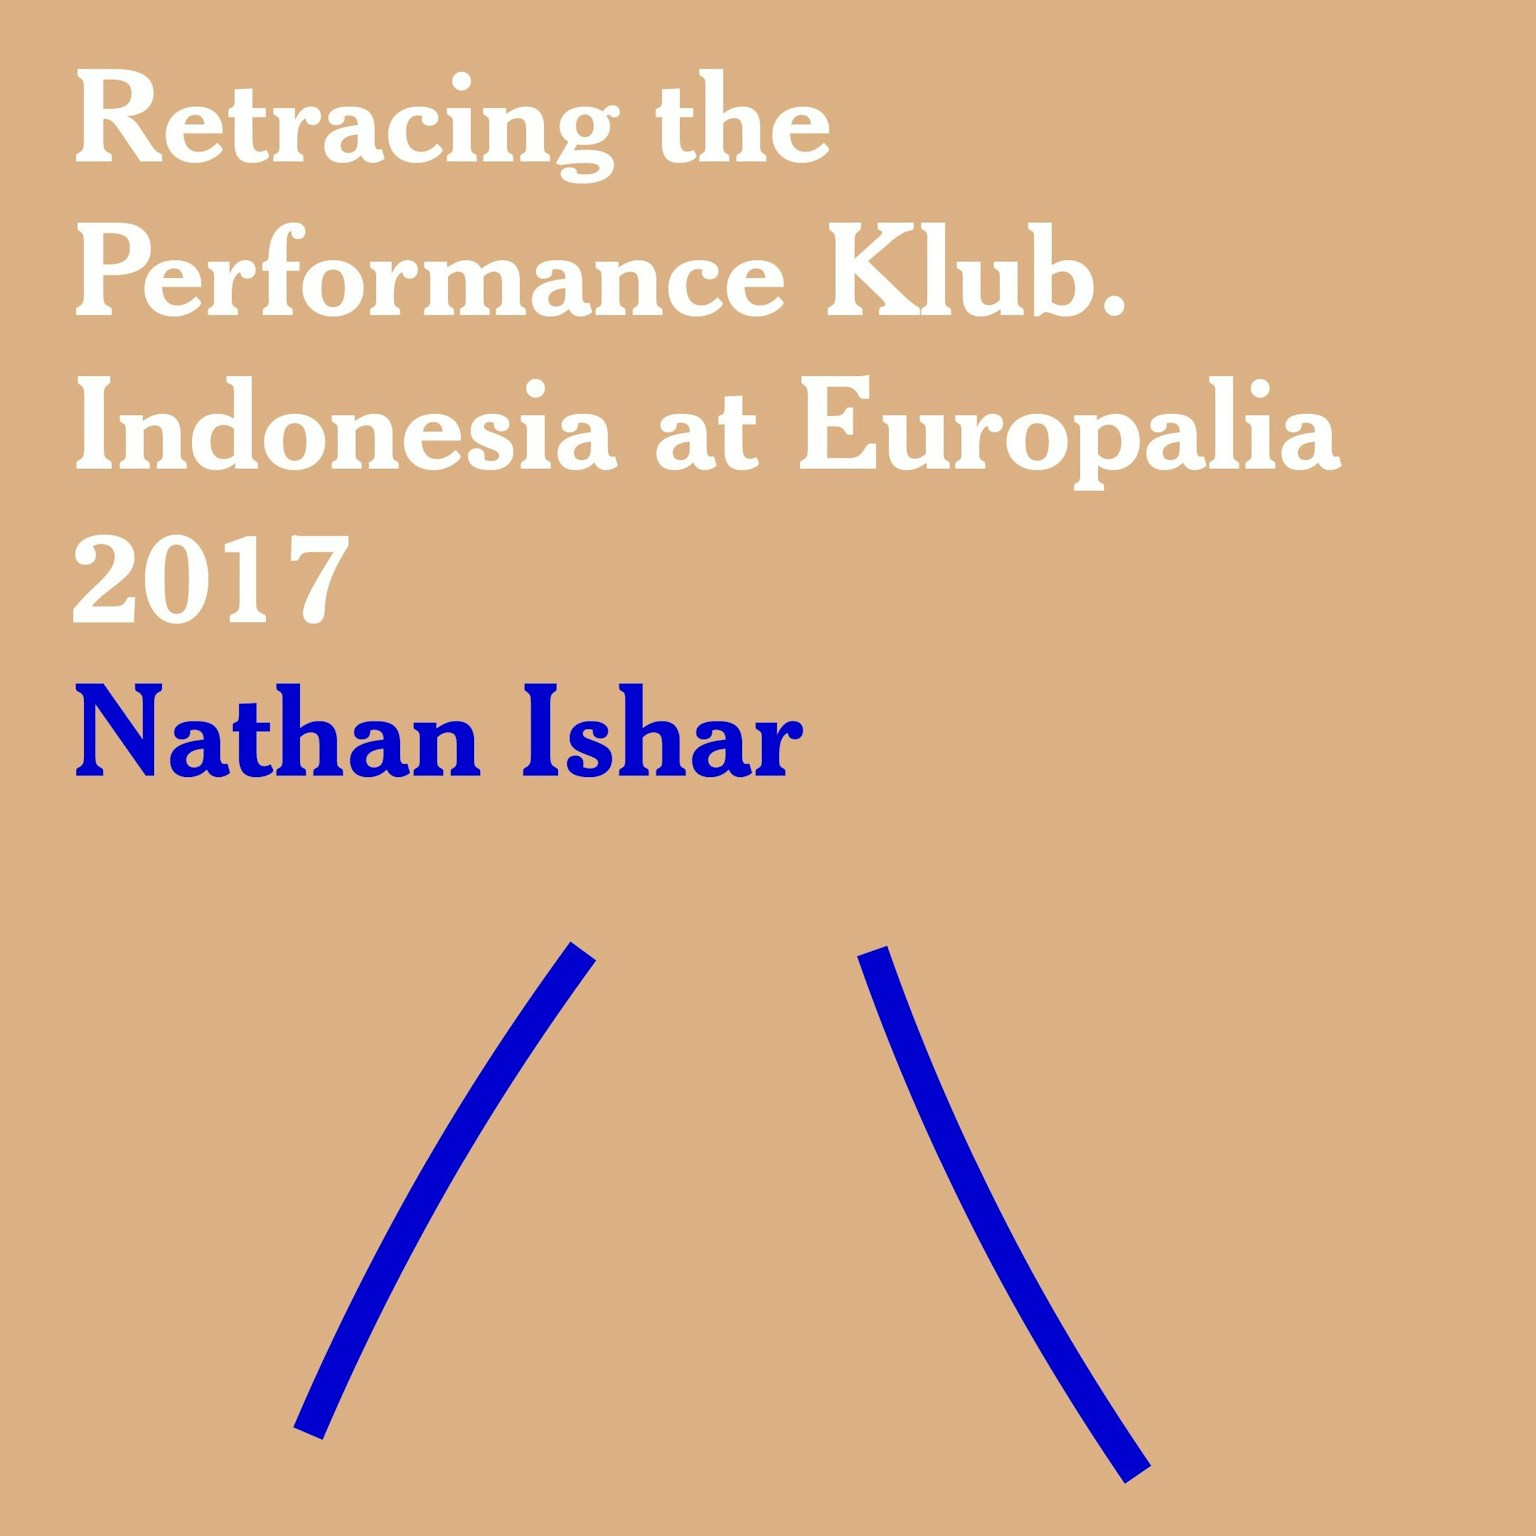 Aflevering 2 Retracing the Performance Klub. Indonesia at Europalia 2017 door Nathan Ishar